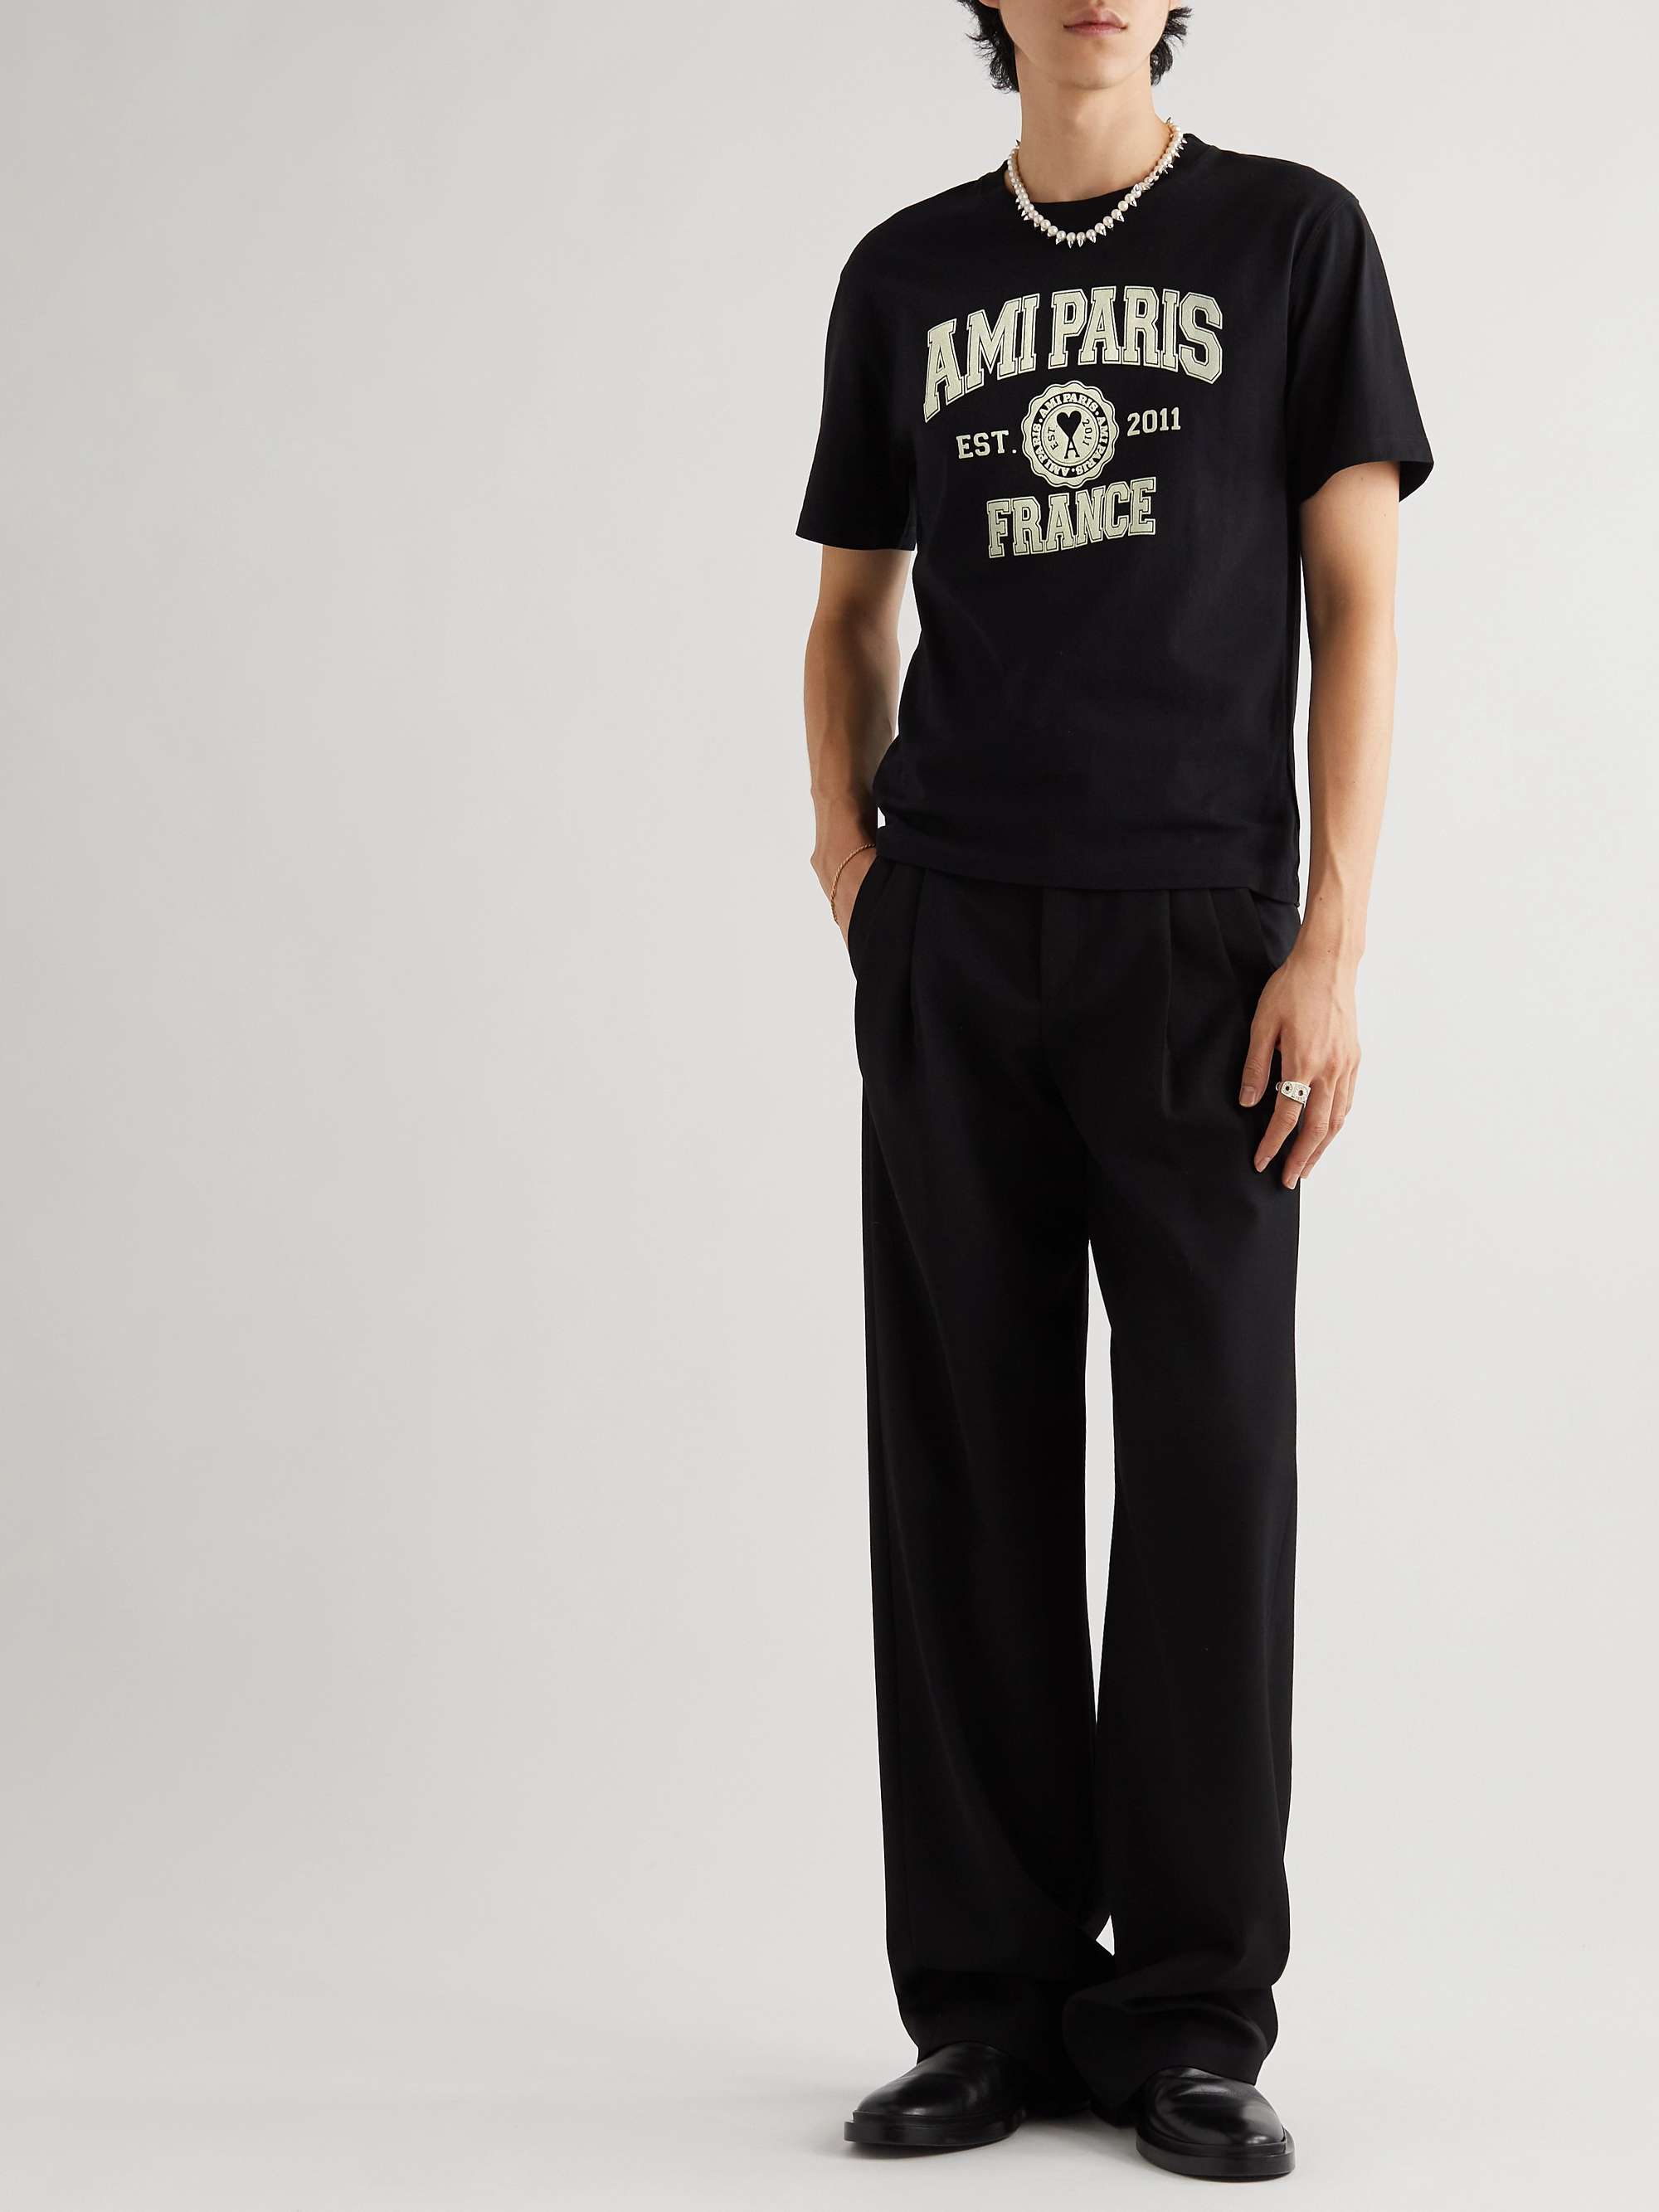 AMI PARIS Logo-Print Cotton-Jersey T-Shirt